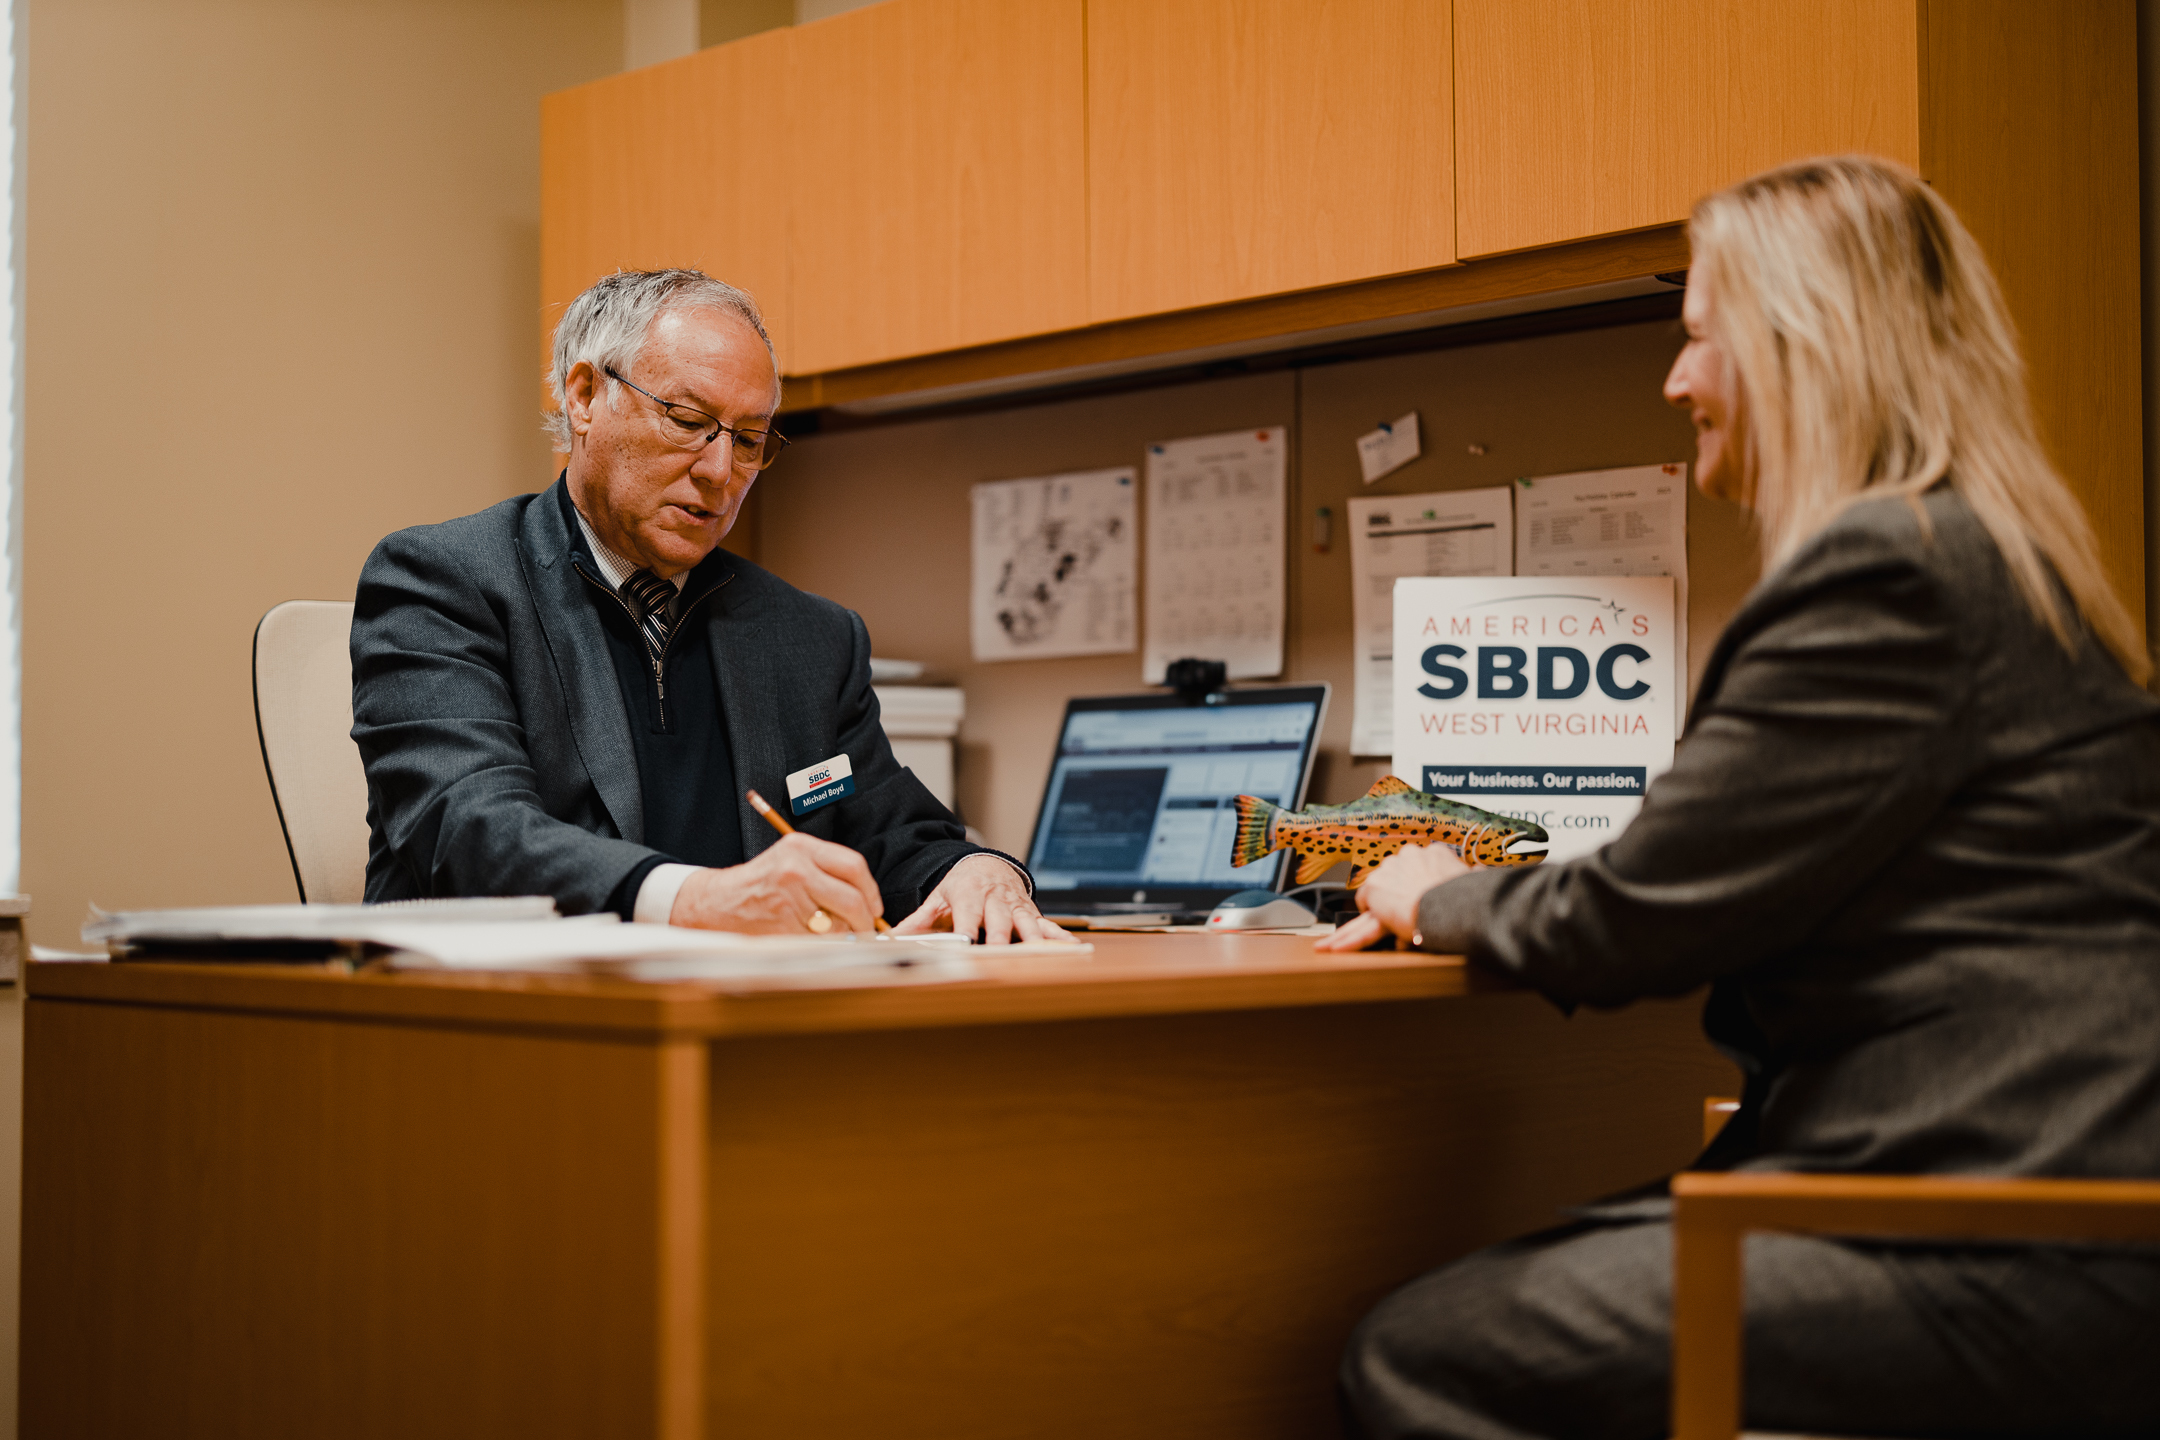 The WV SBDC opens satellite office in Shepherd University's business lab